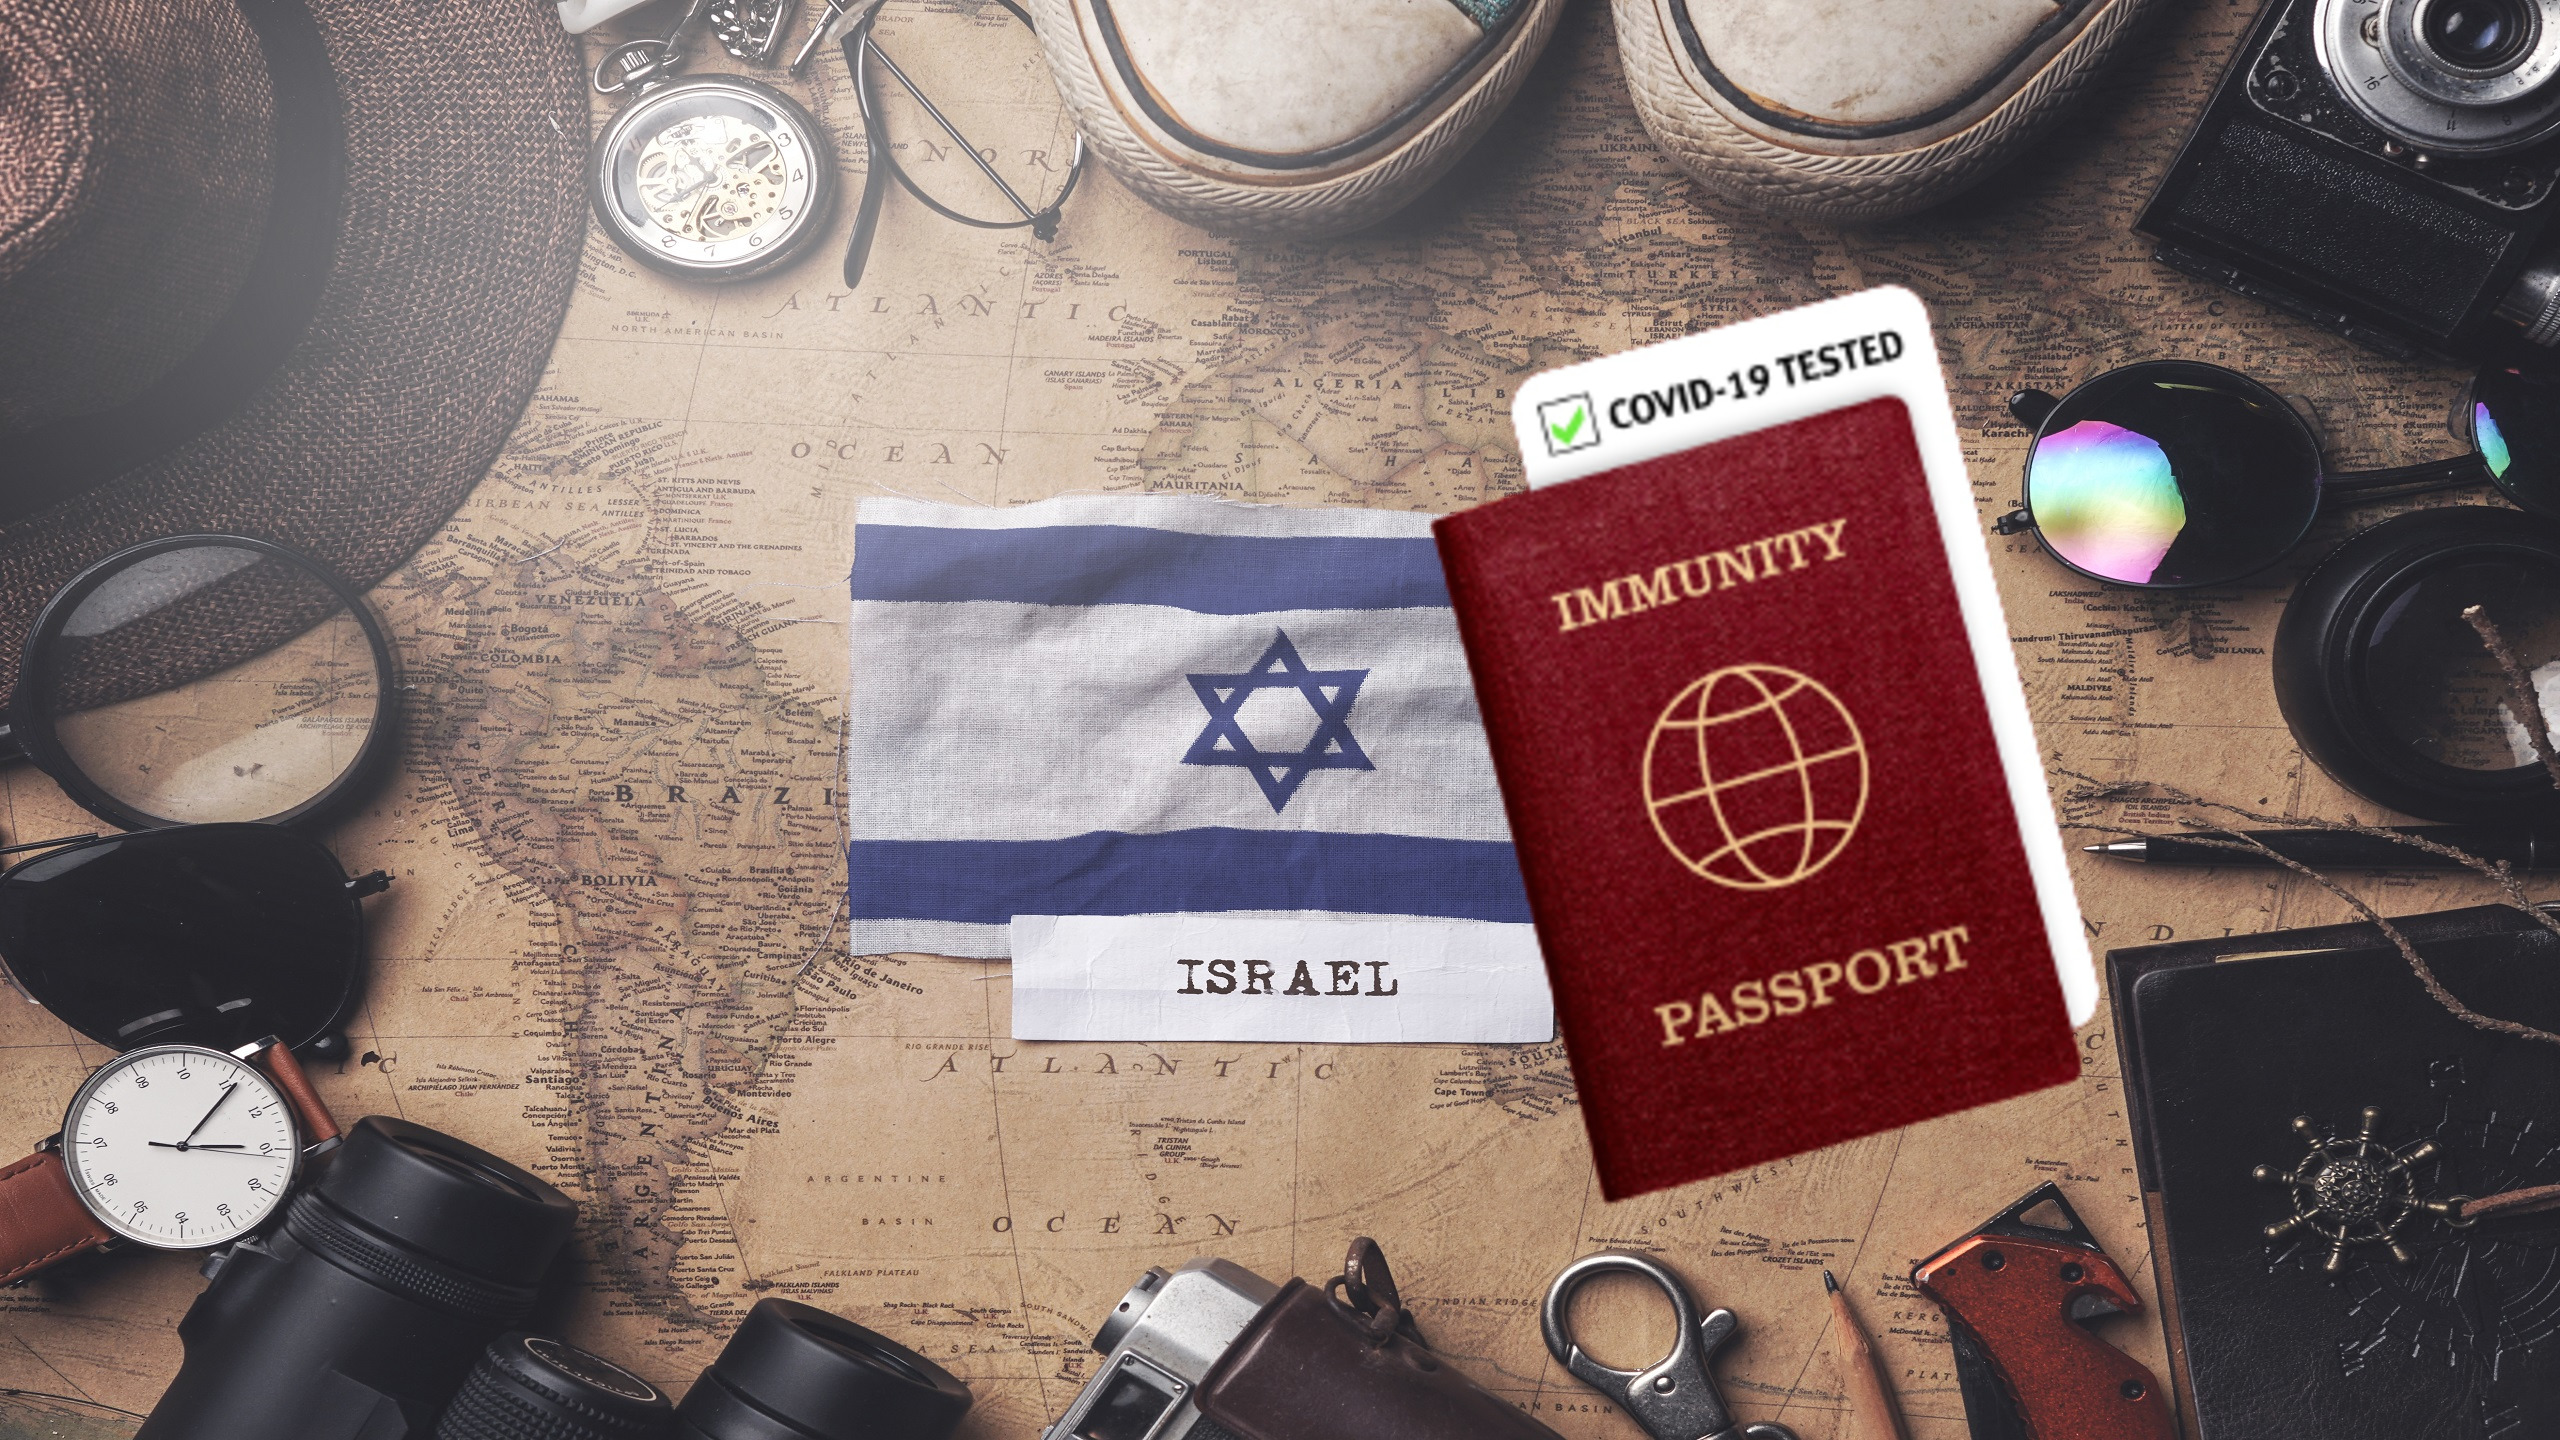 Expert: Tourism to Israel Safe With Proper Safeguards